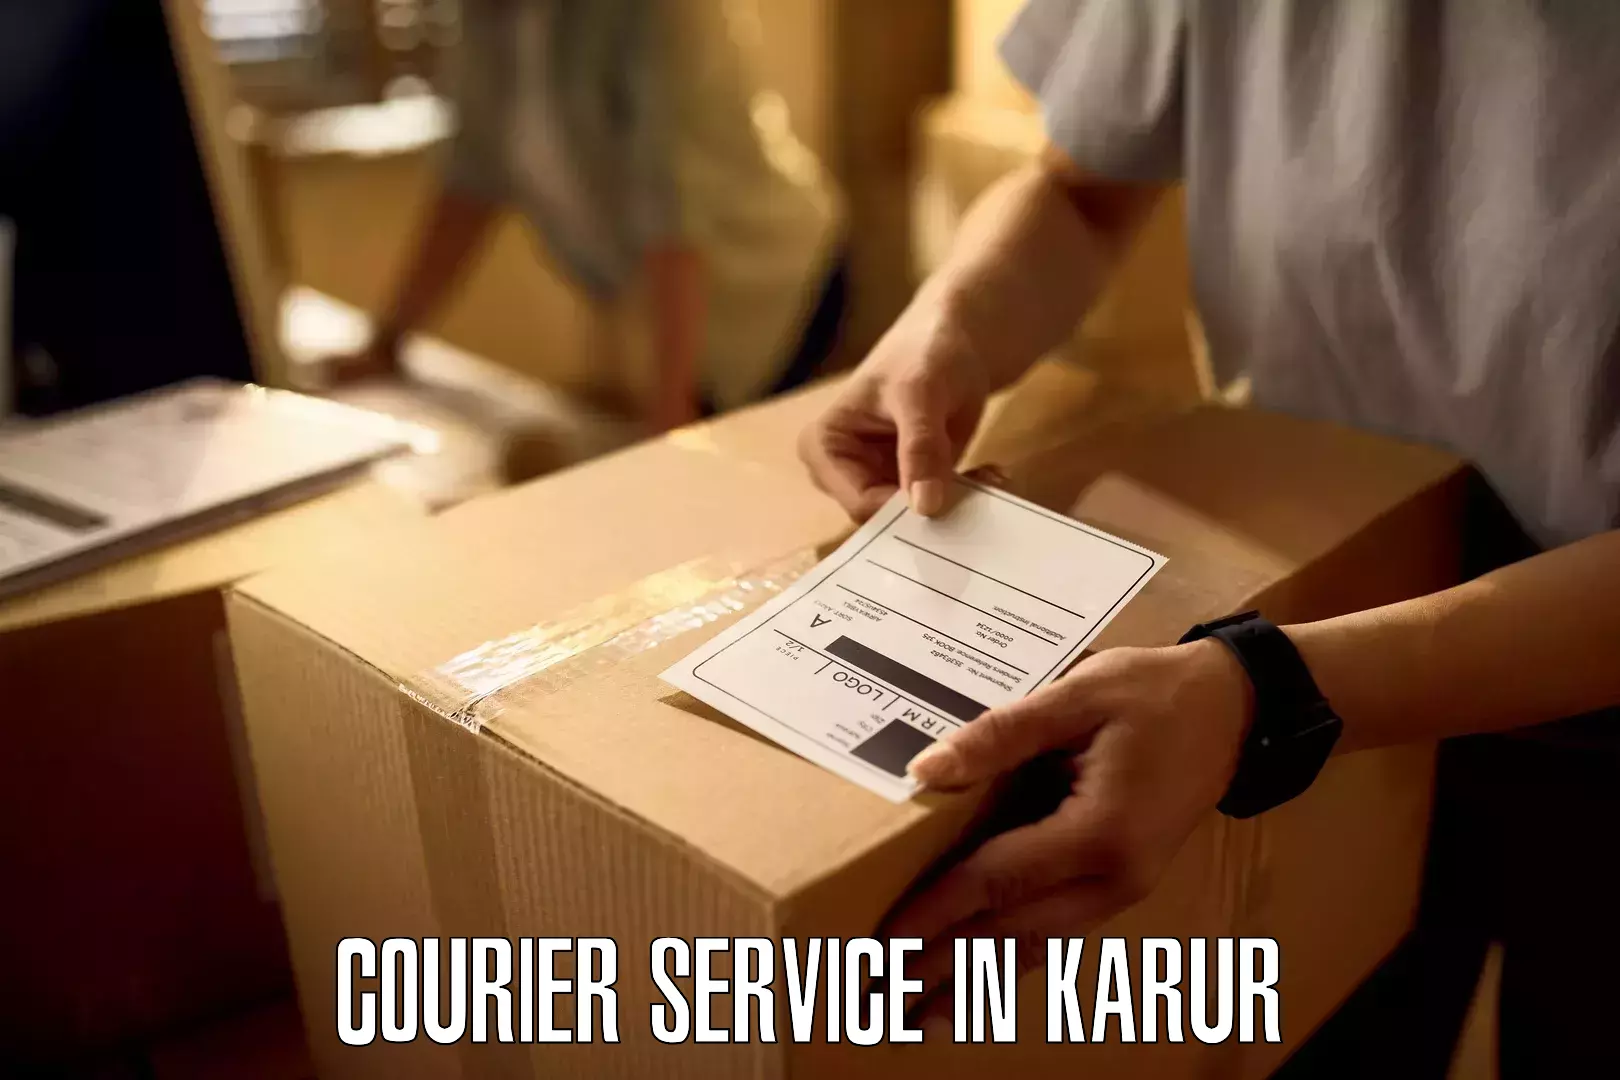 Remote area delivery in Karur